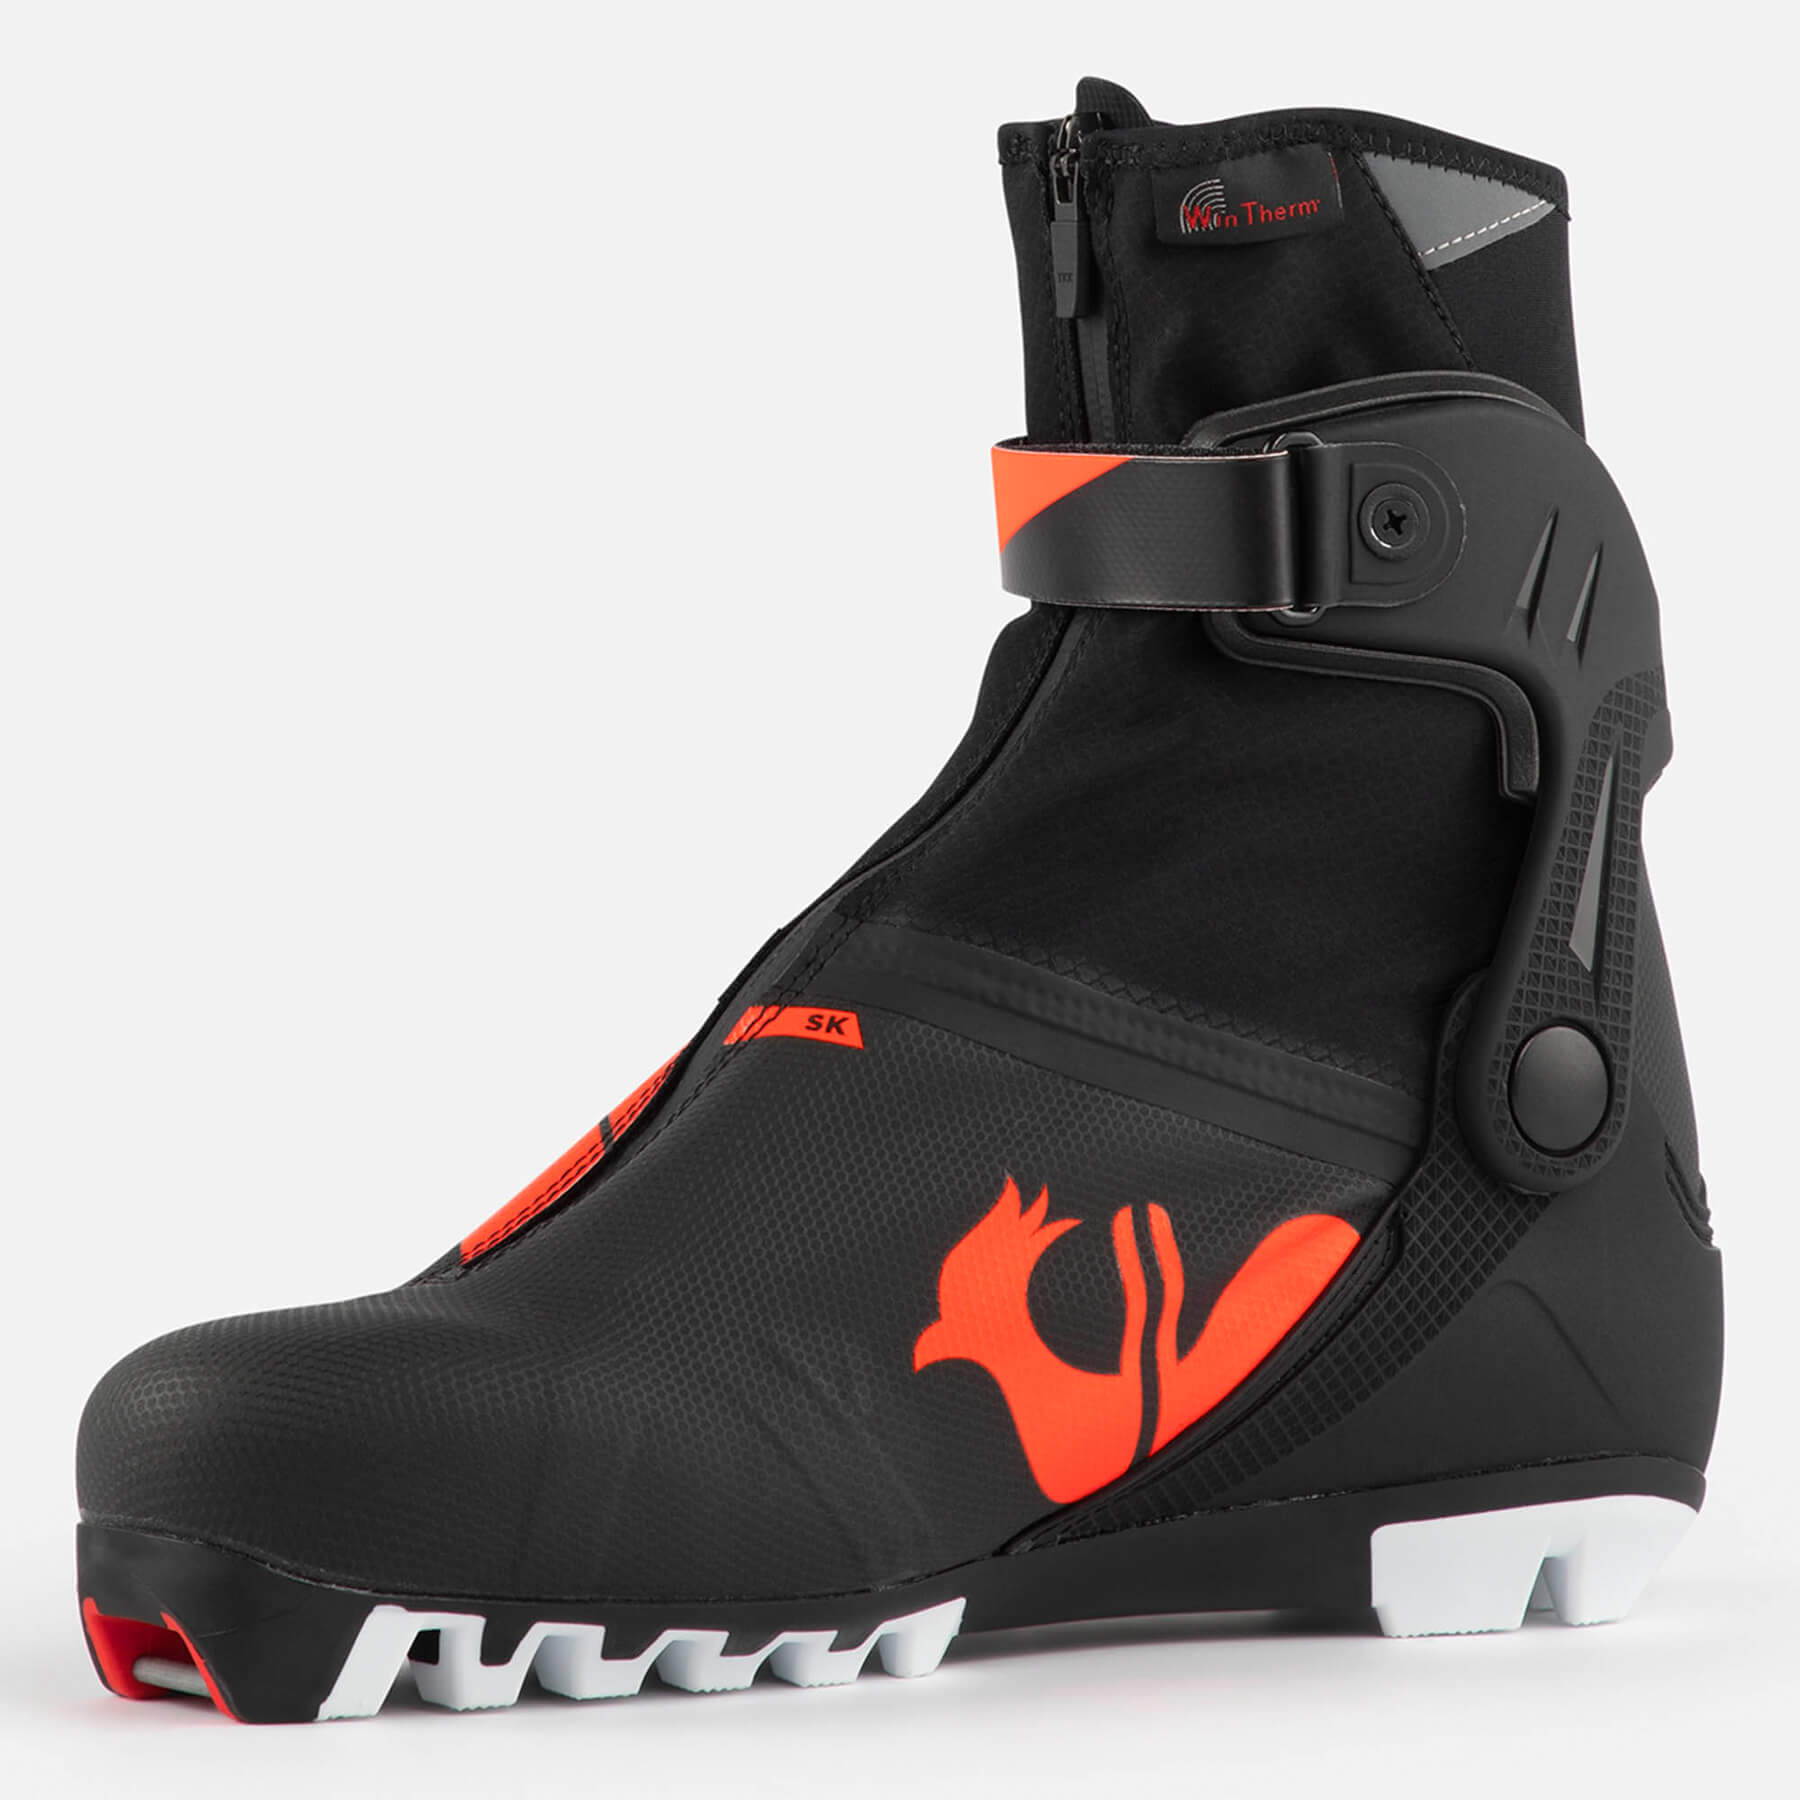 Rossignol X-10 Skate Boot